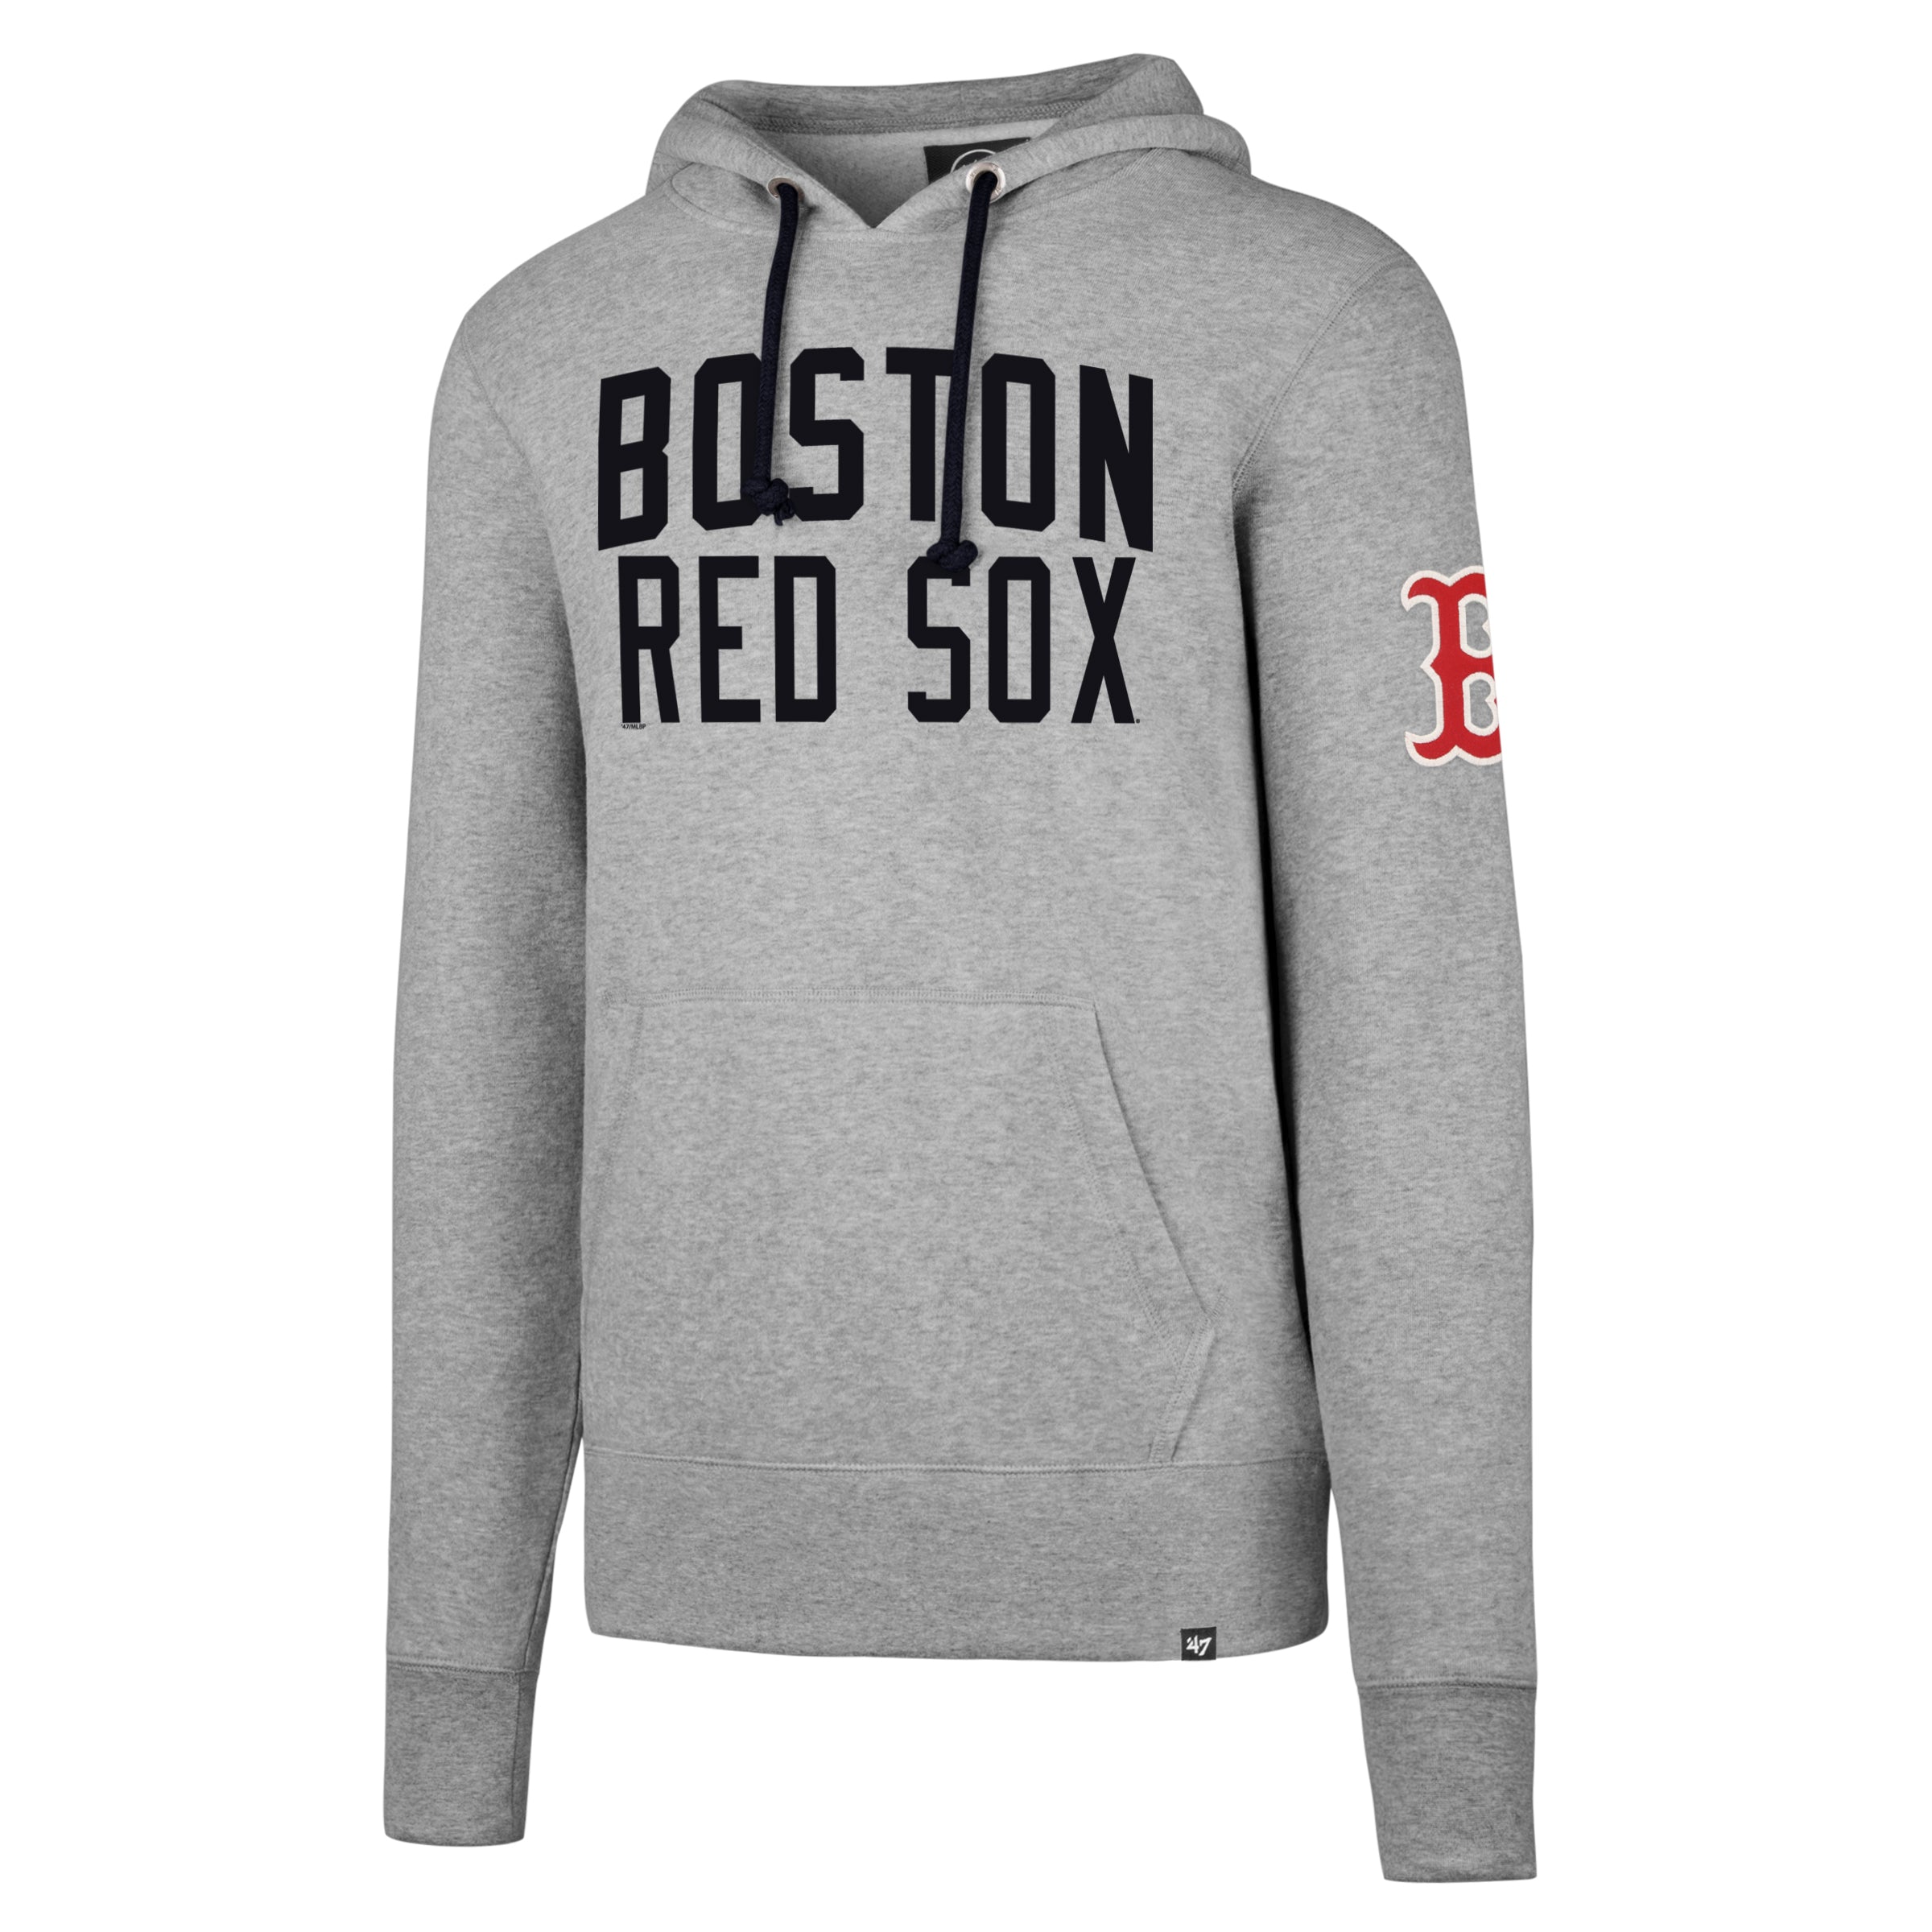 Boston Red Sox crew neck Sweatshirt Men's grey 47 BRAND BRAND NEW